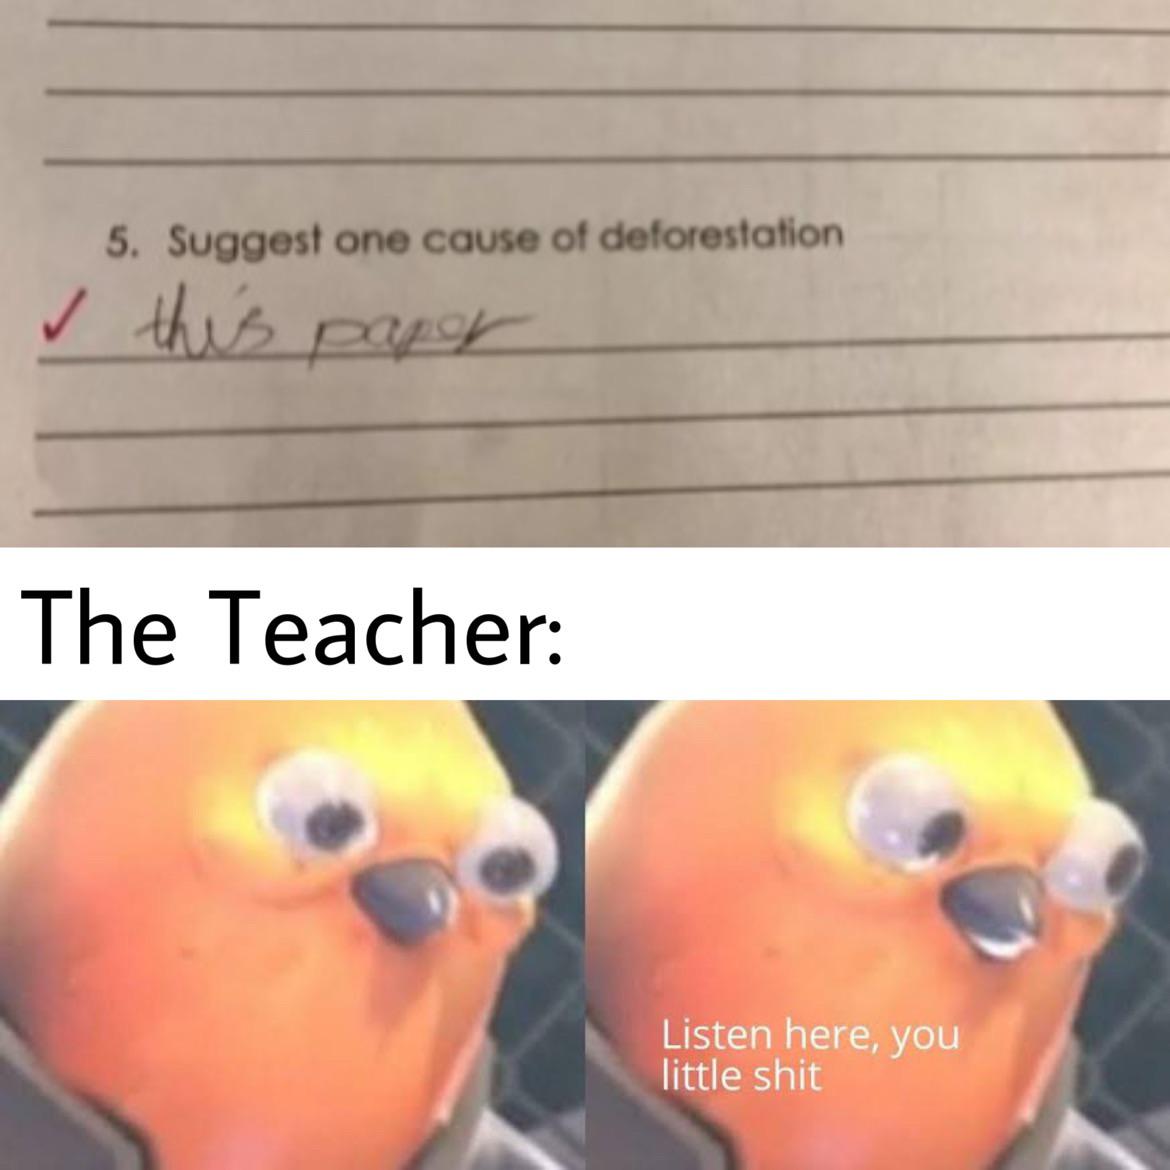 monday morning randomness - listen here you little bird meme - 5. Suggest one cause of deforestation this paper The Teacher Listen here, you little shit